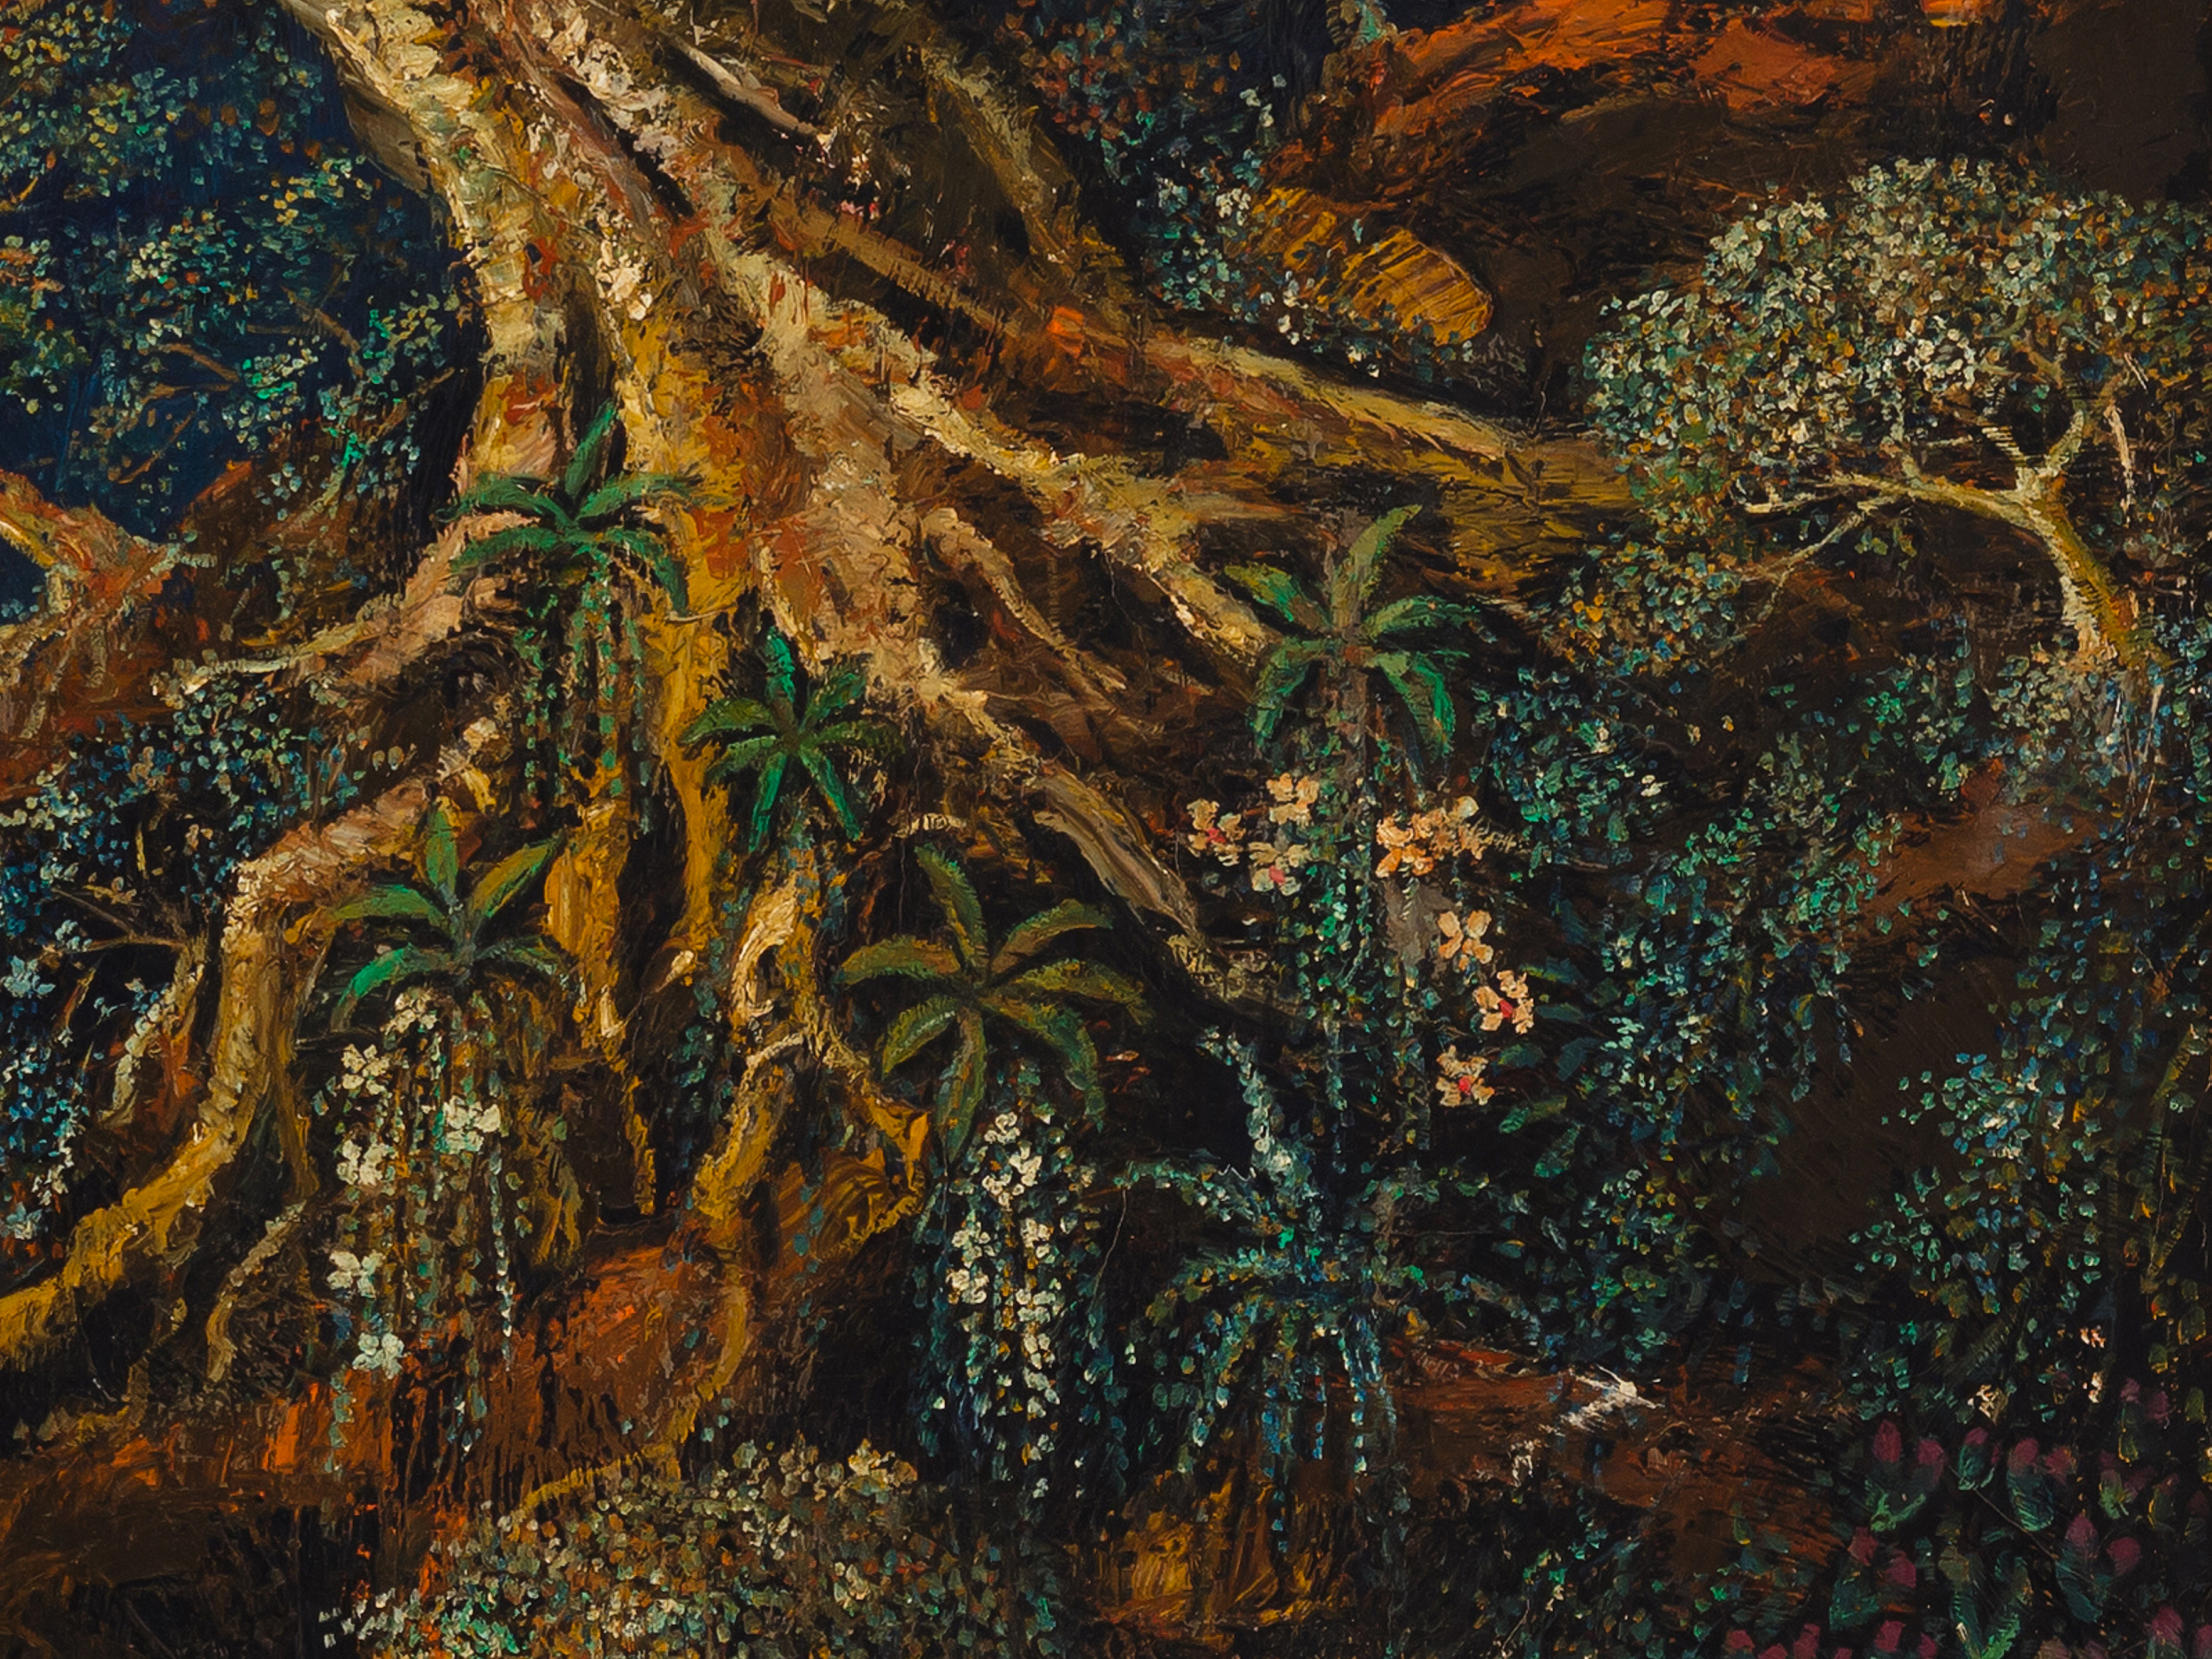   Pohon Flamboyan,  1991 oil on canvas, detail   H.Widayat   client:  Cedric Edwin Pinto    